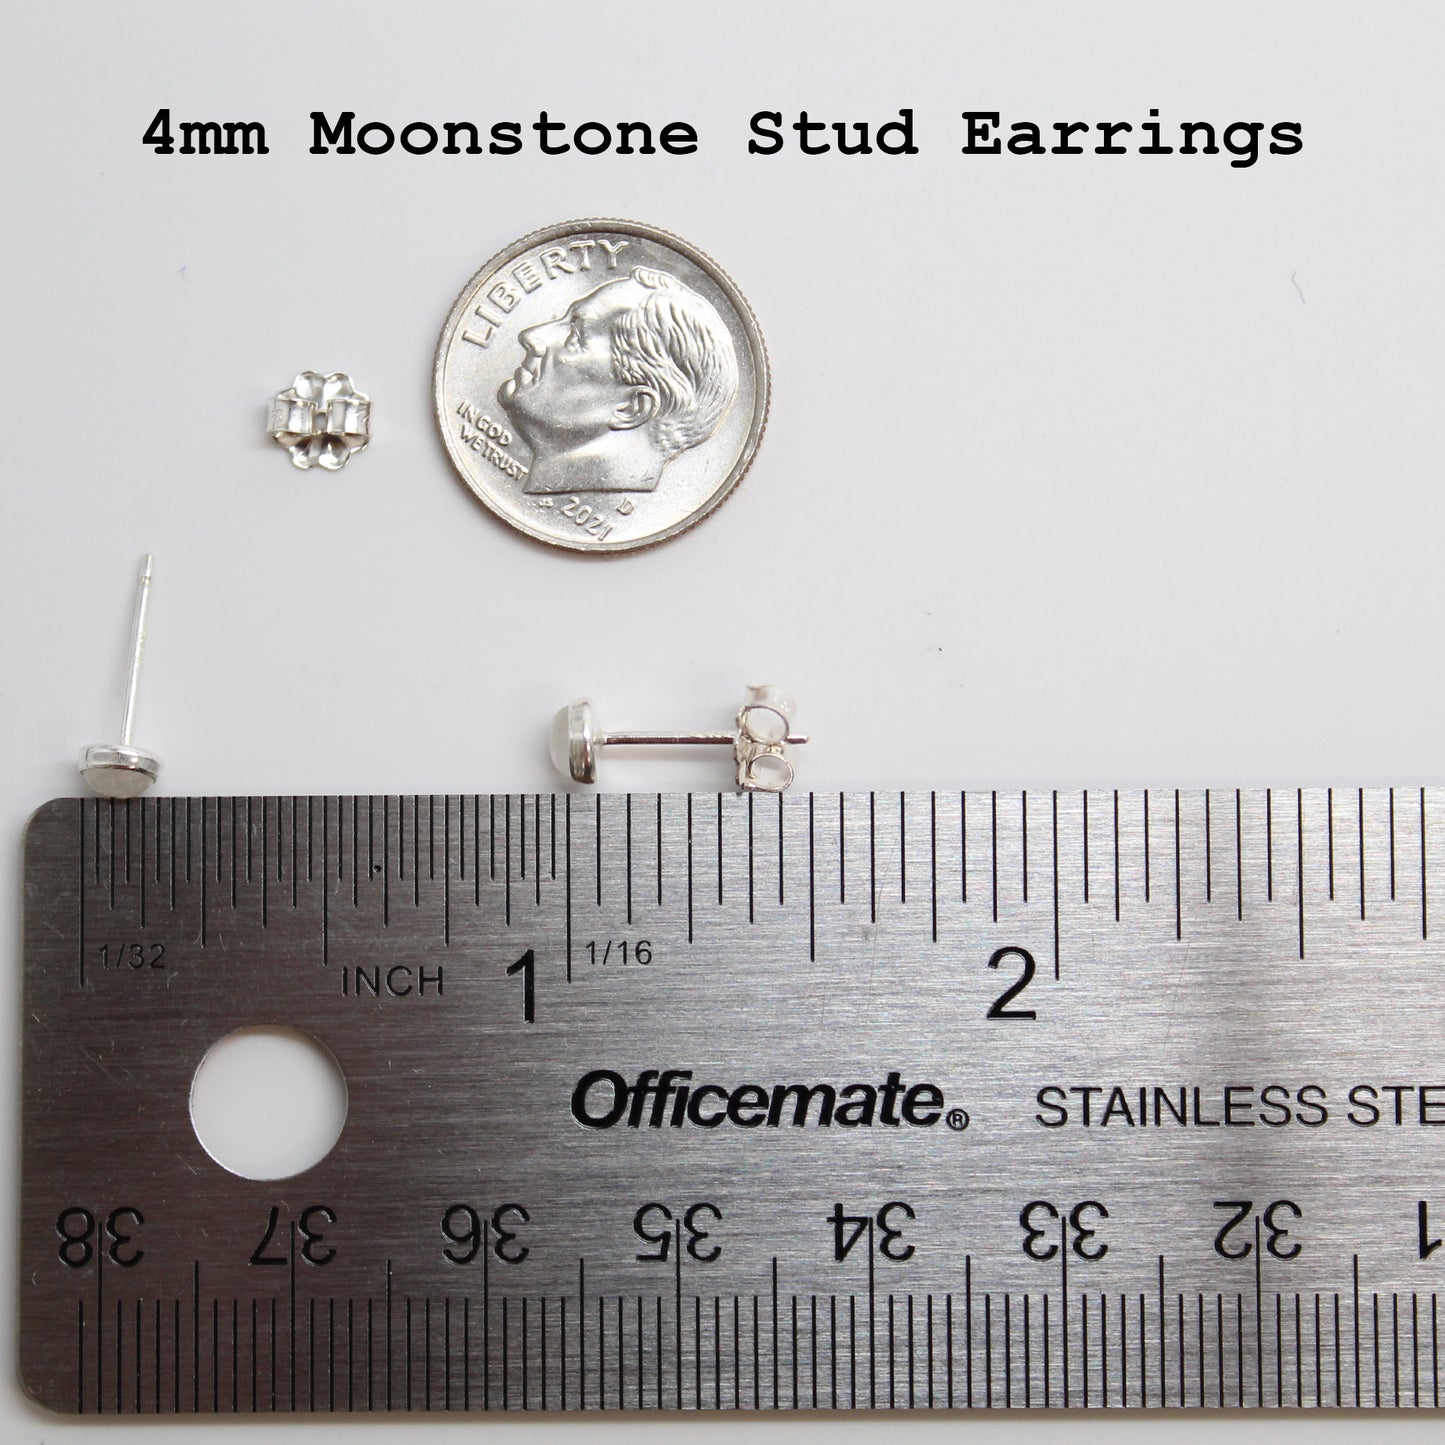 Moonstone Stud Earrings in Sterling Silver-Small 4mm Studs